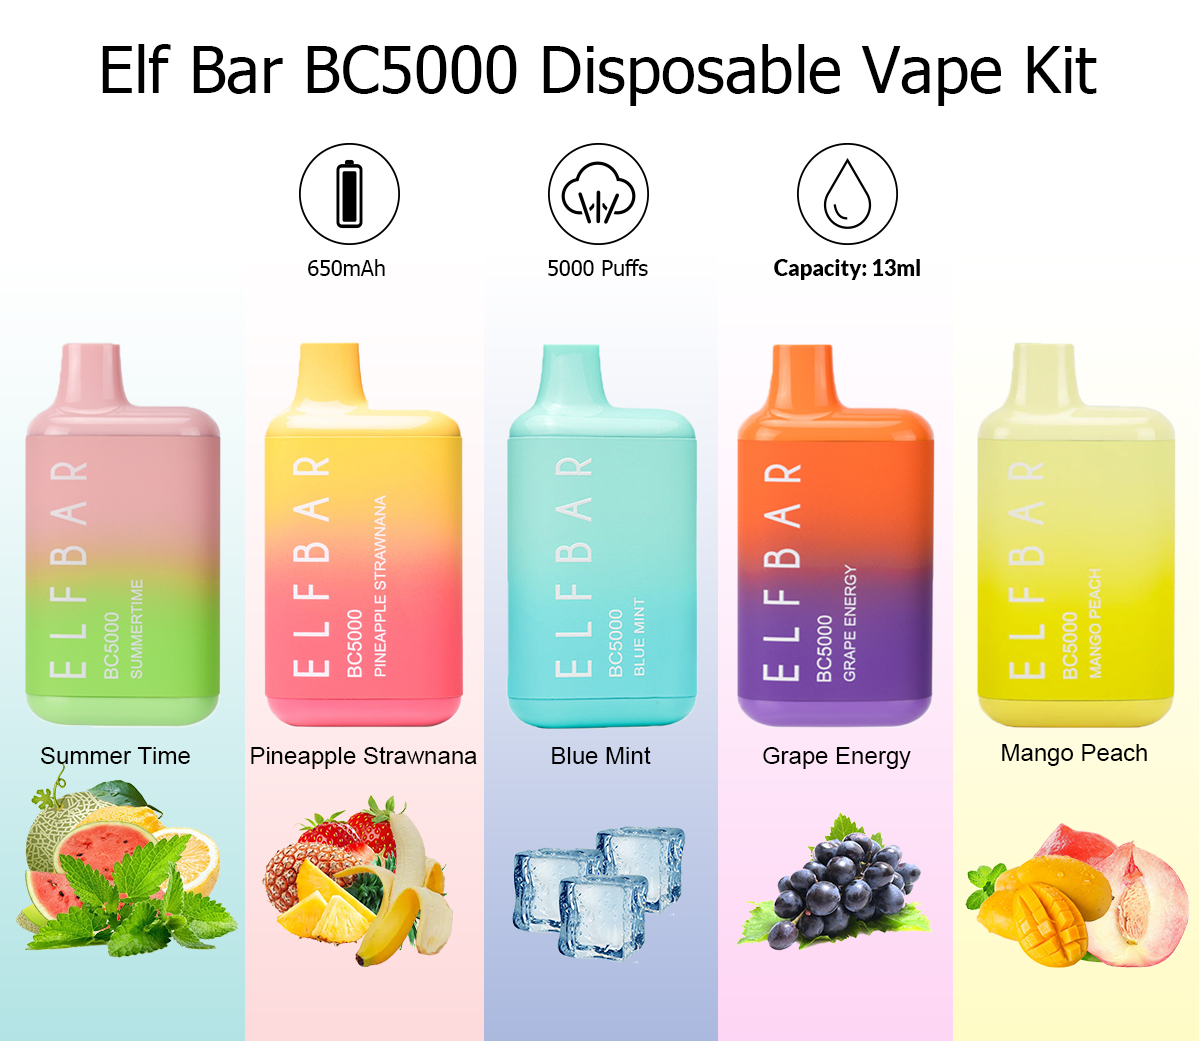 Best Disposable Vape - Elf Bar BC5000